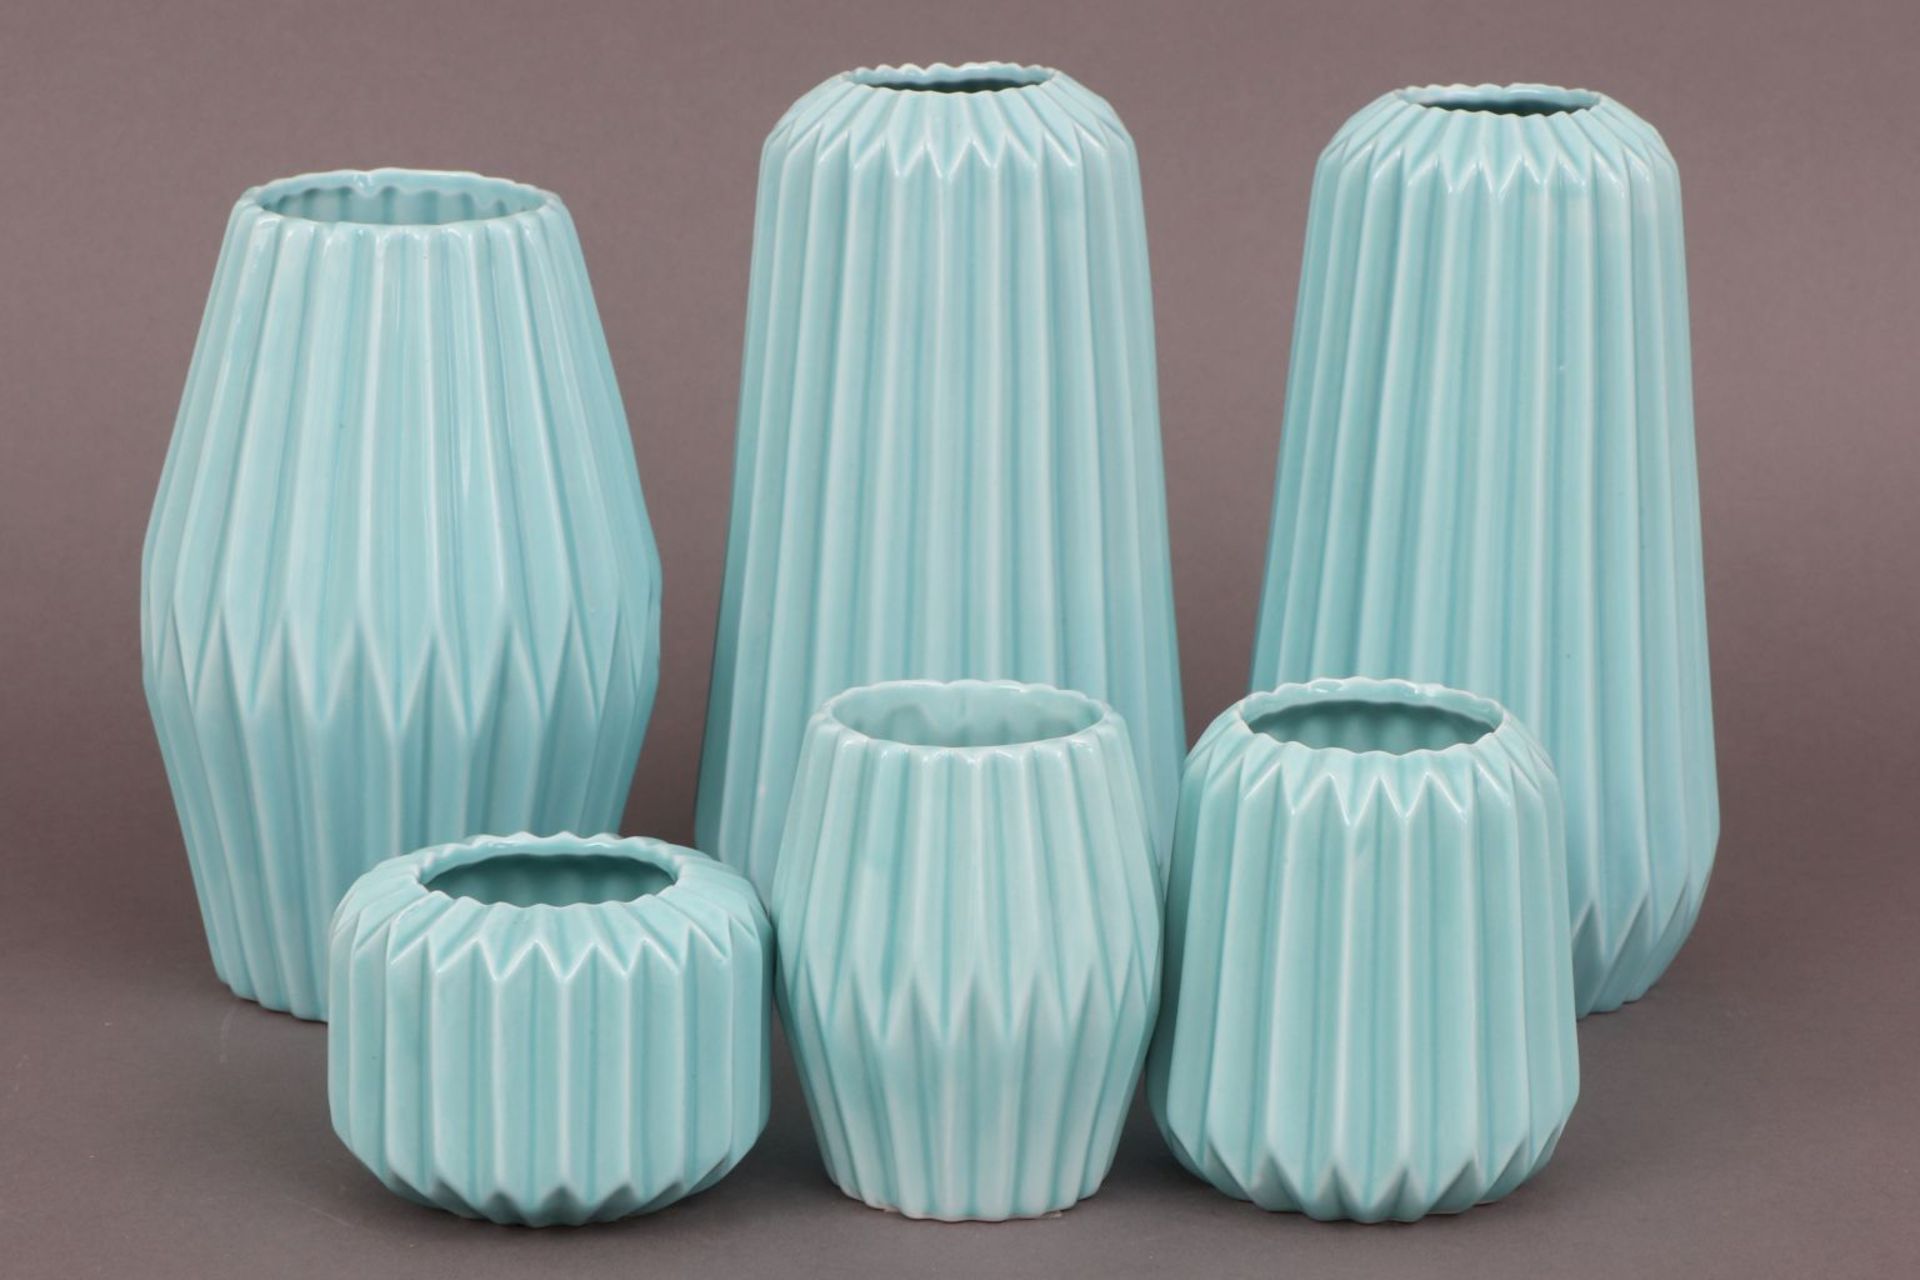 6 BLOOMINGVILLE Vasen im skandinavischen Mid-century StilPorzellan, mintgrün glasiert, diverse - Image 2 of 4